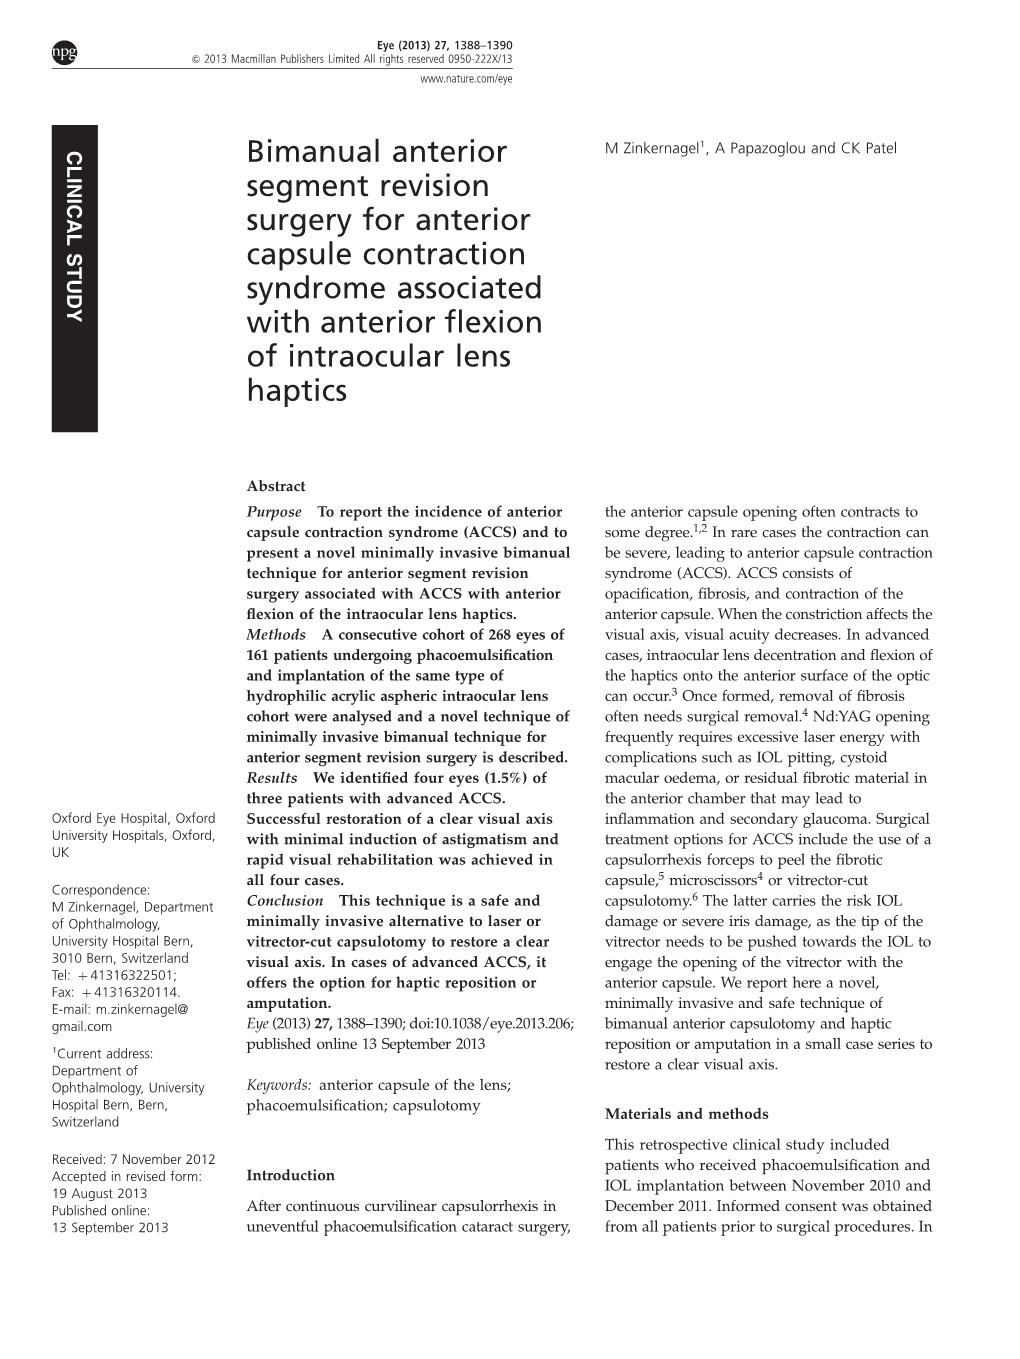 Bimanual Anterior Segment Revision Surgery for Anterior Capsule